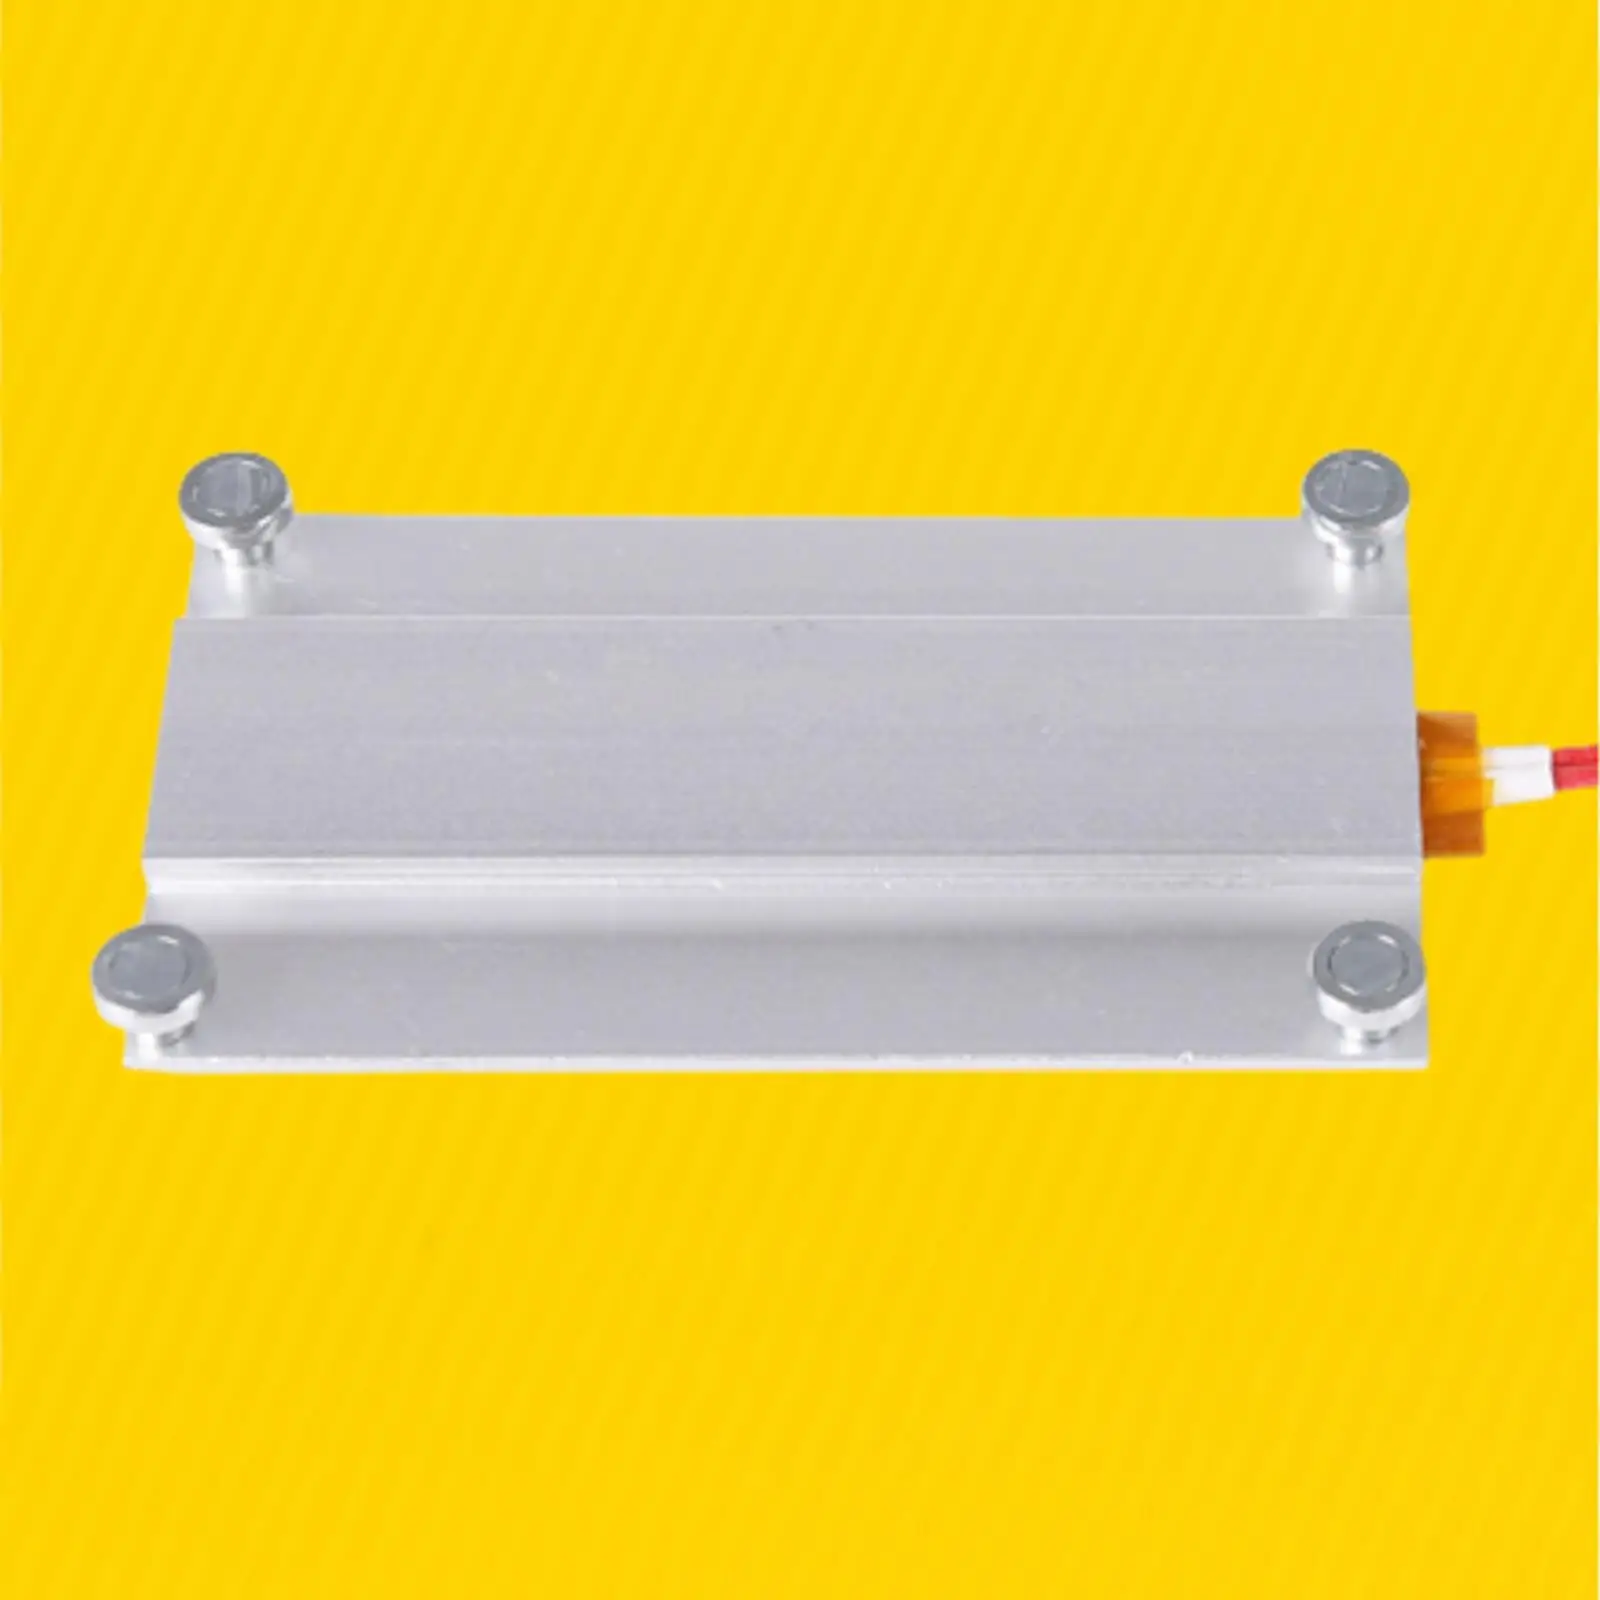 LED Heating Soldering Chip Durable Rectangle Aluminum Desoldering Split Plate LED Repair Tools for Soldering Disassemble Gadgets